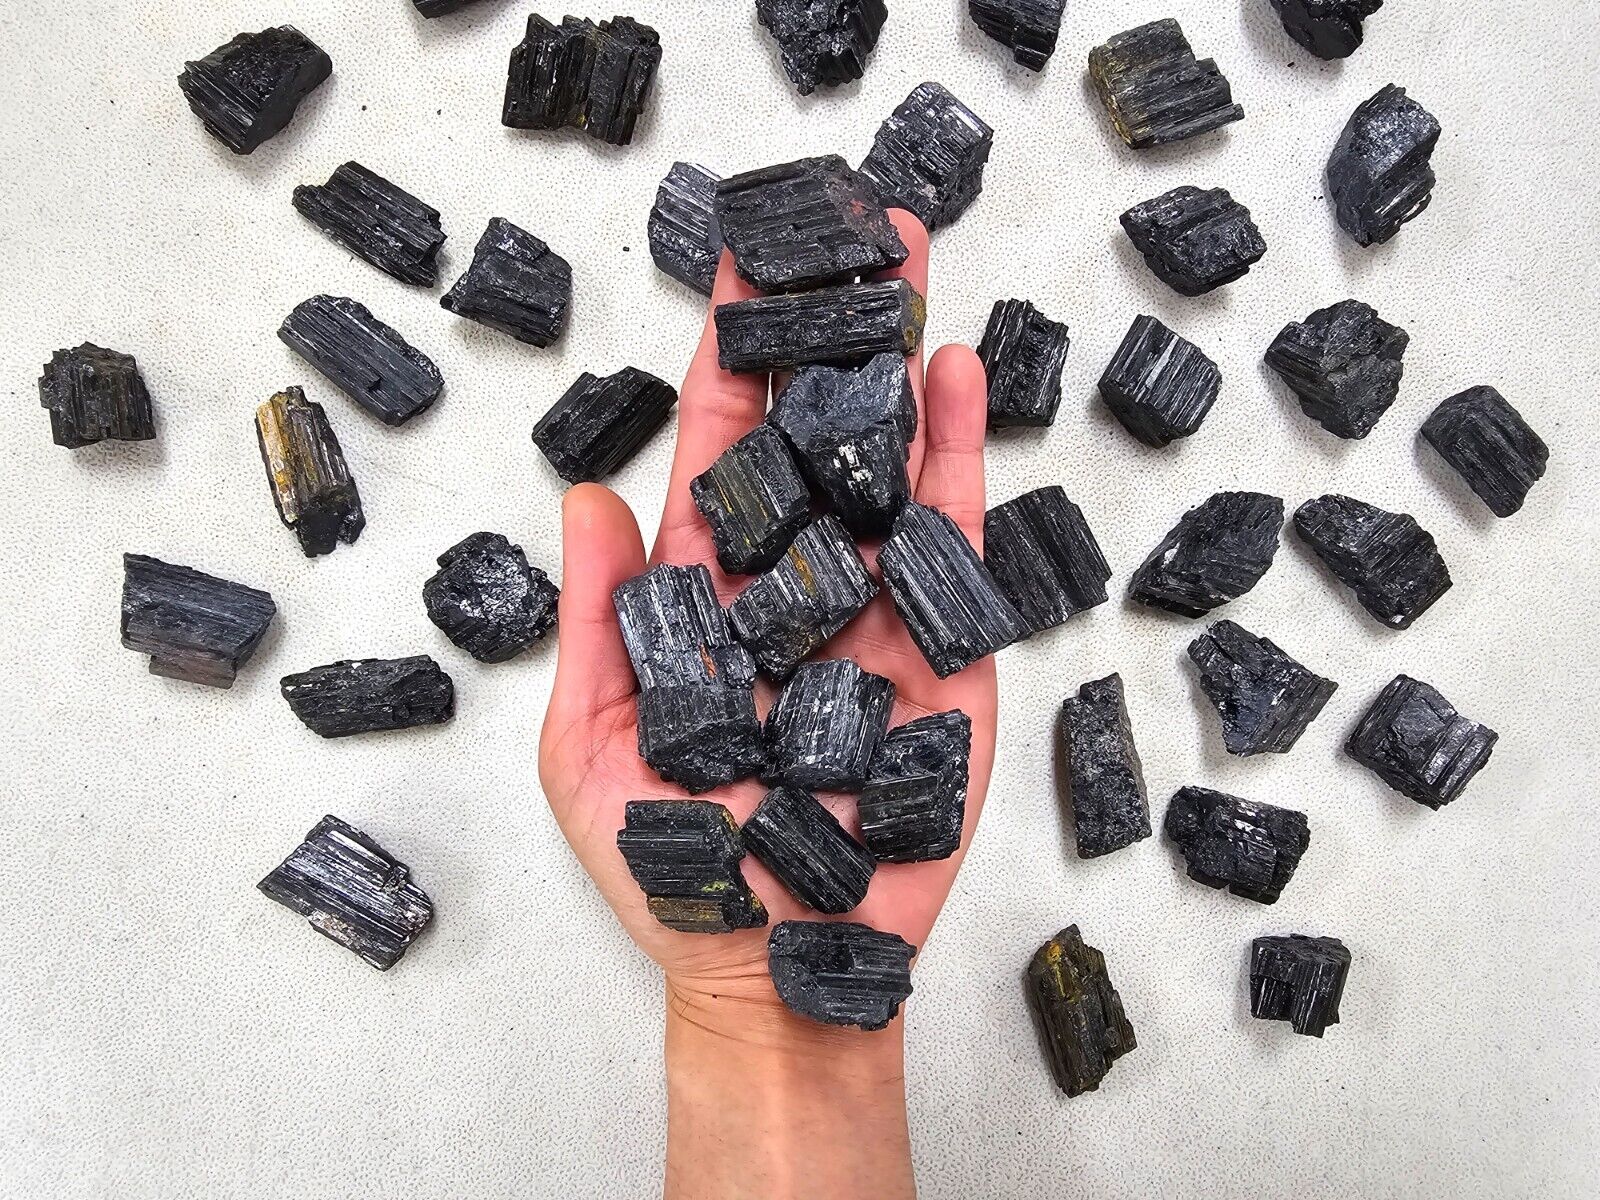 Black Tourmaline Crystals Raw Rough Haystack Healing Stones Bulk from Brazil